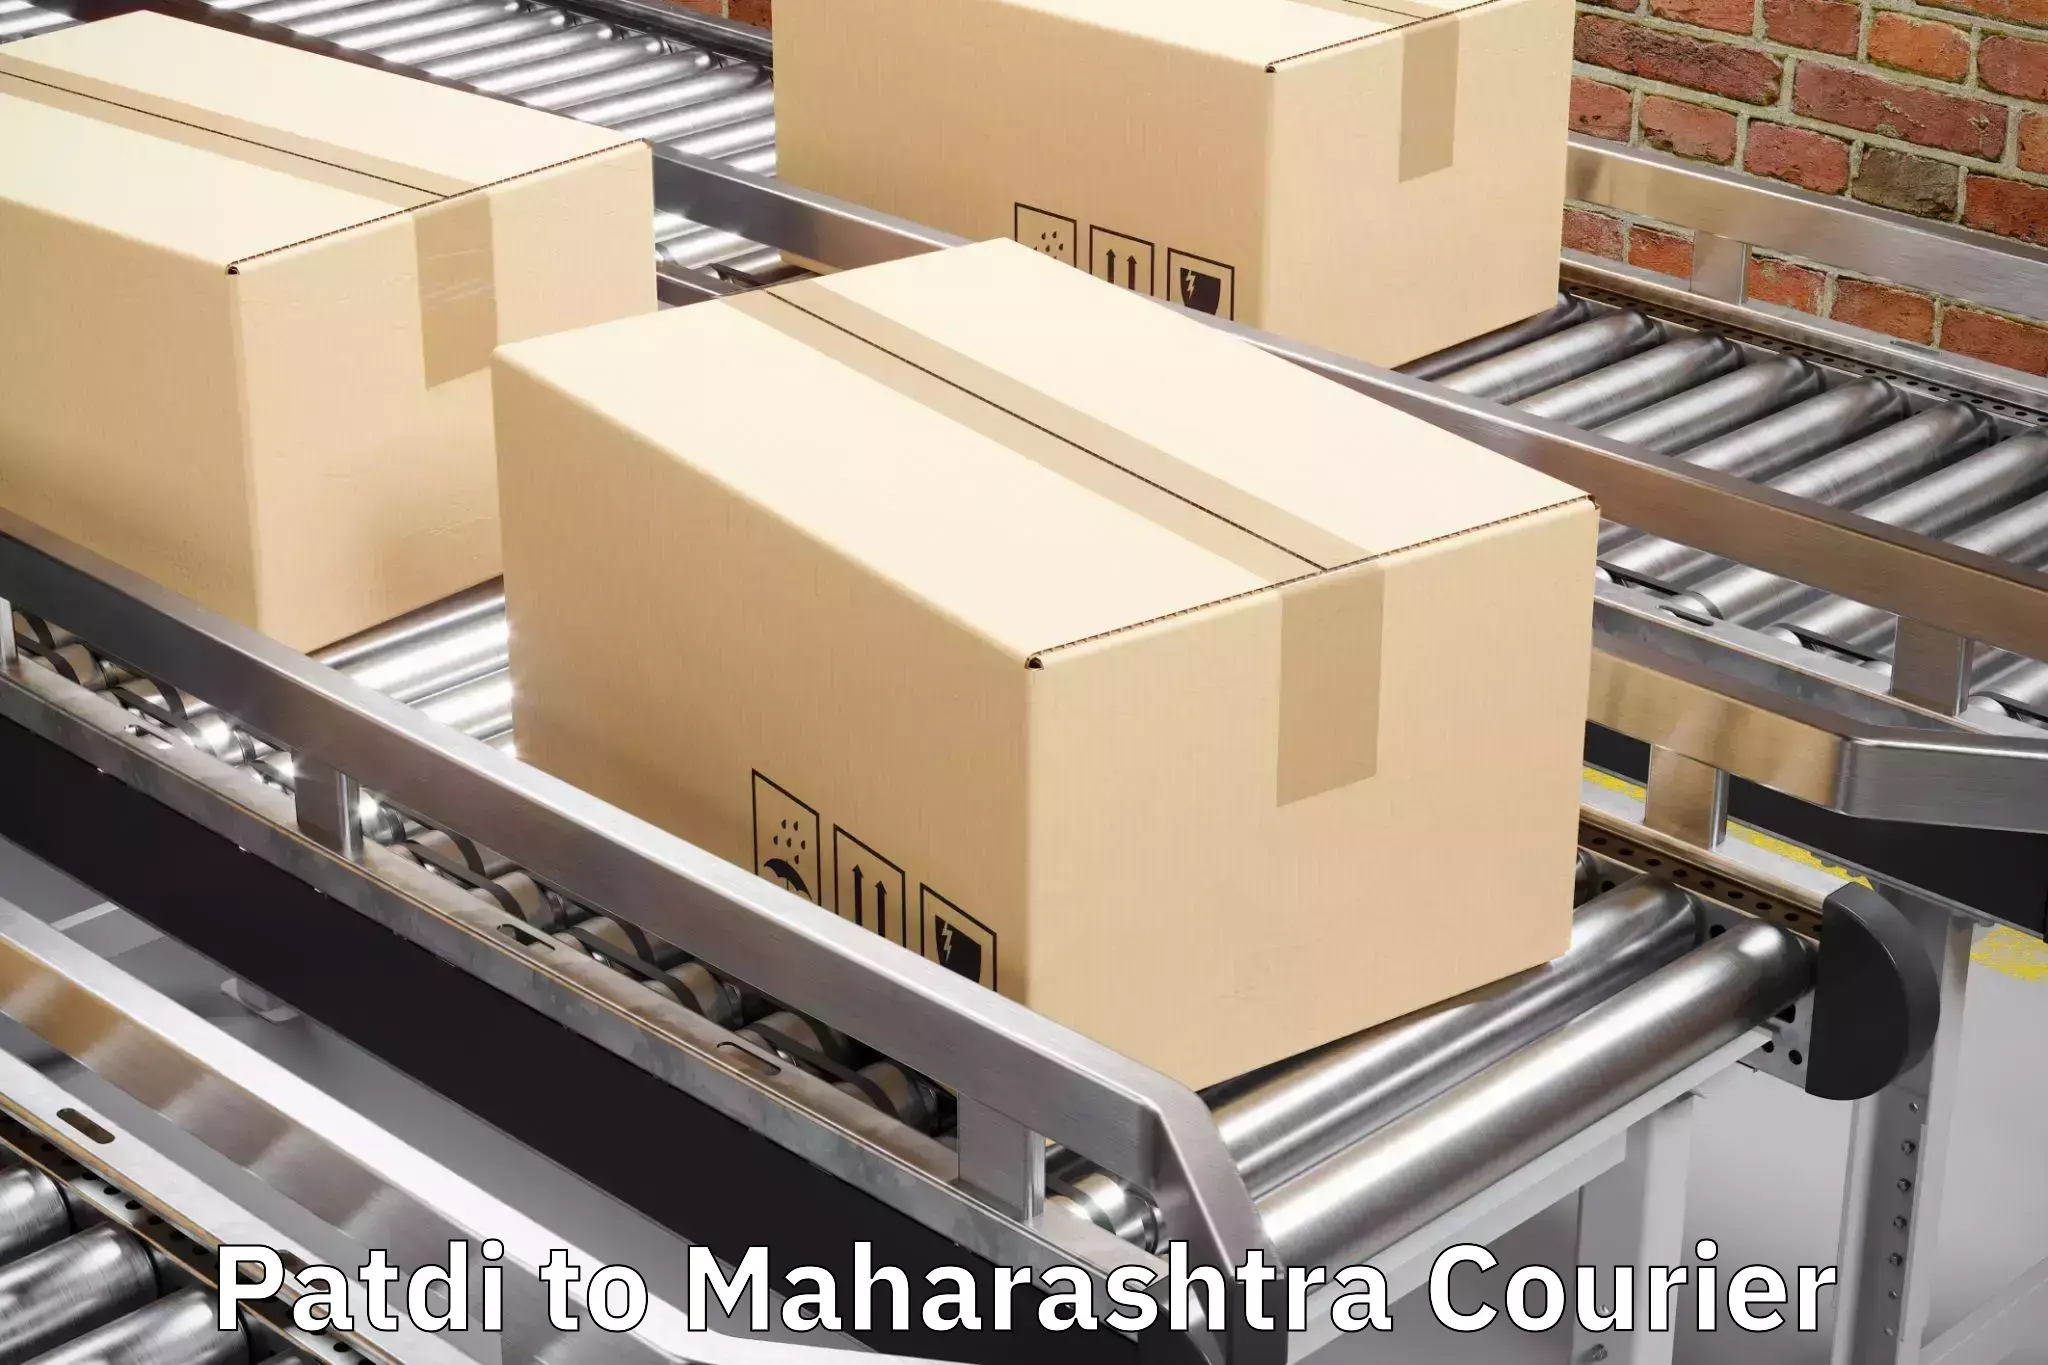 Luggage transport consultancy Patdi to Maharashtra